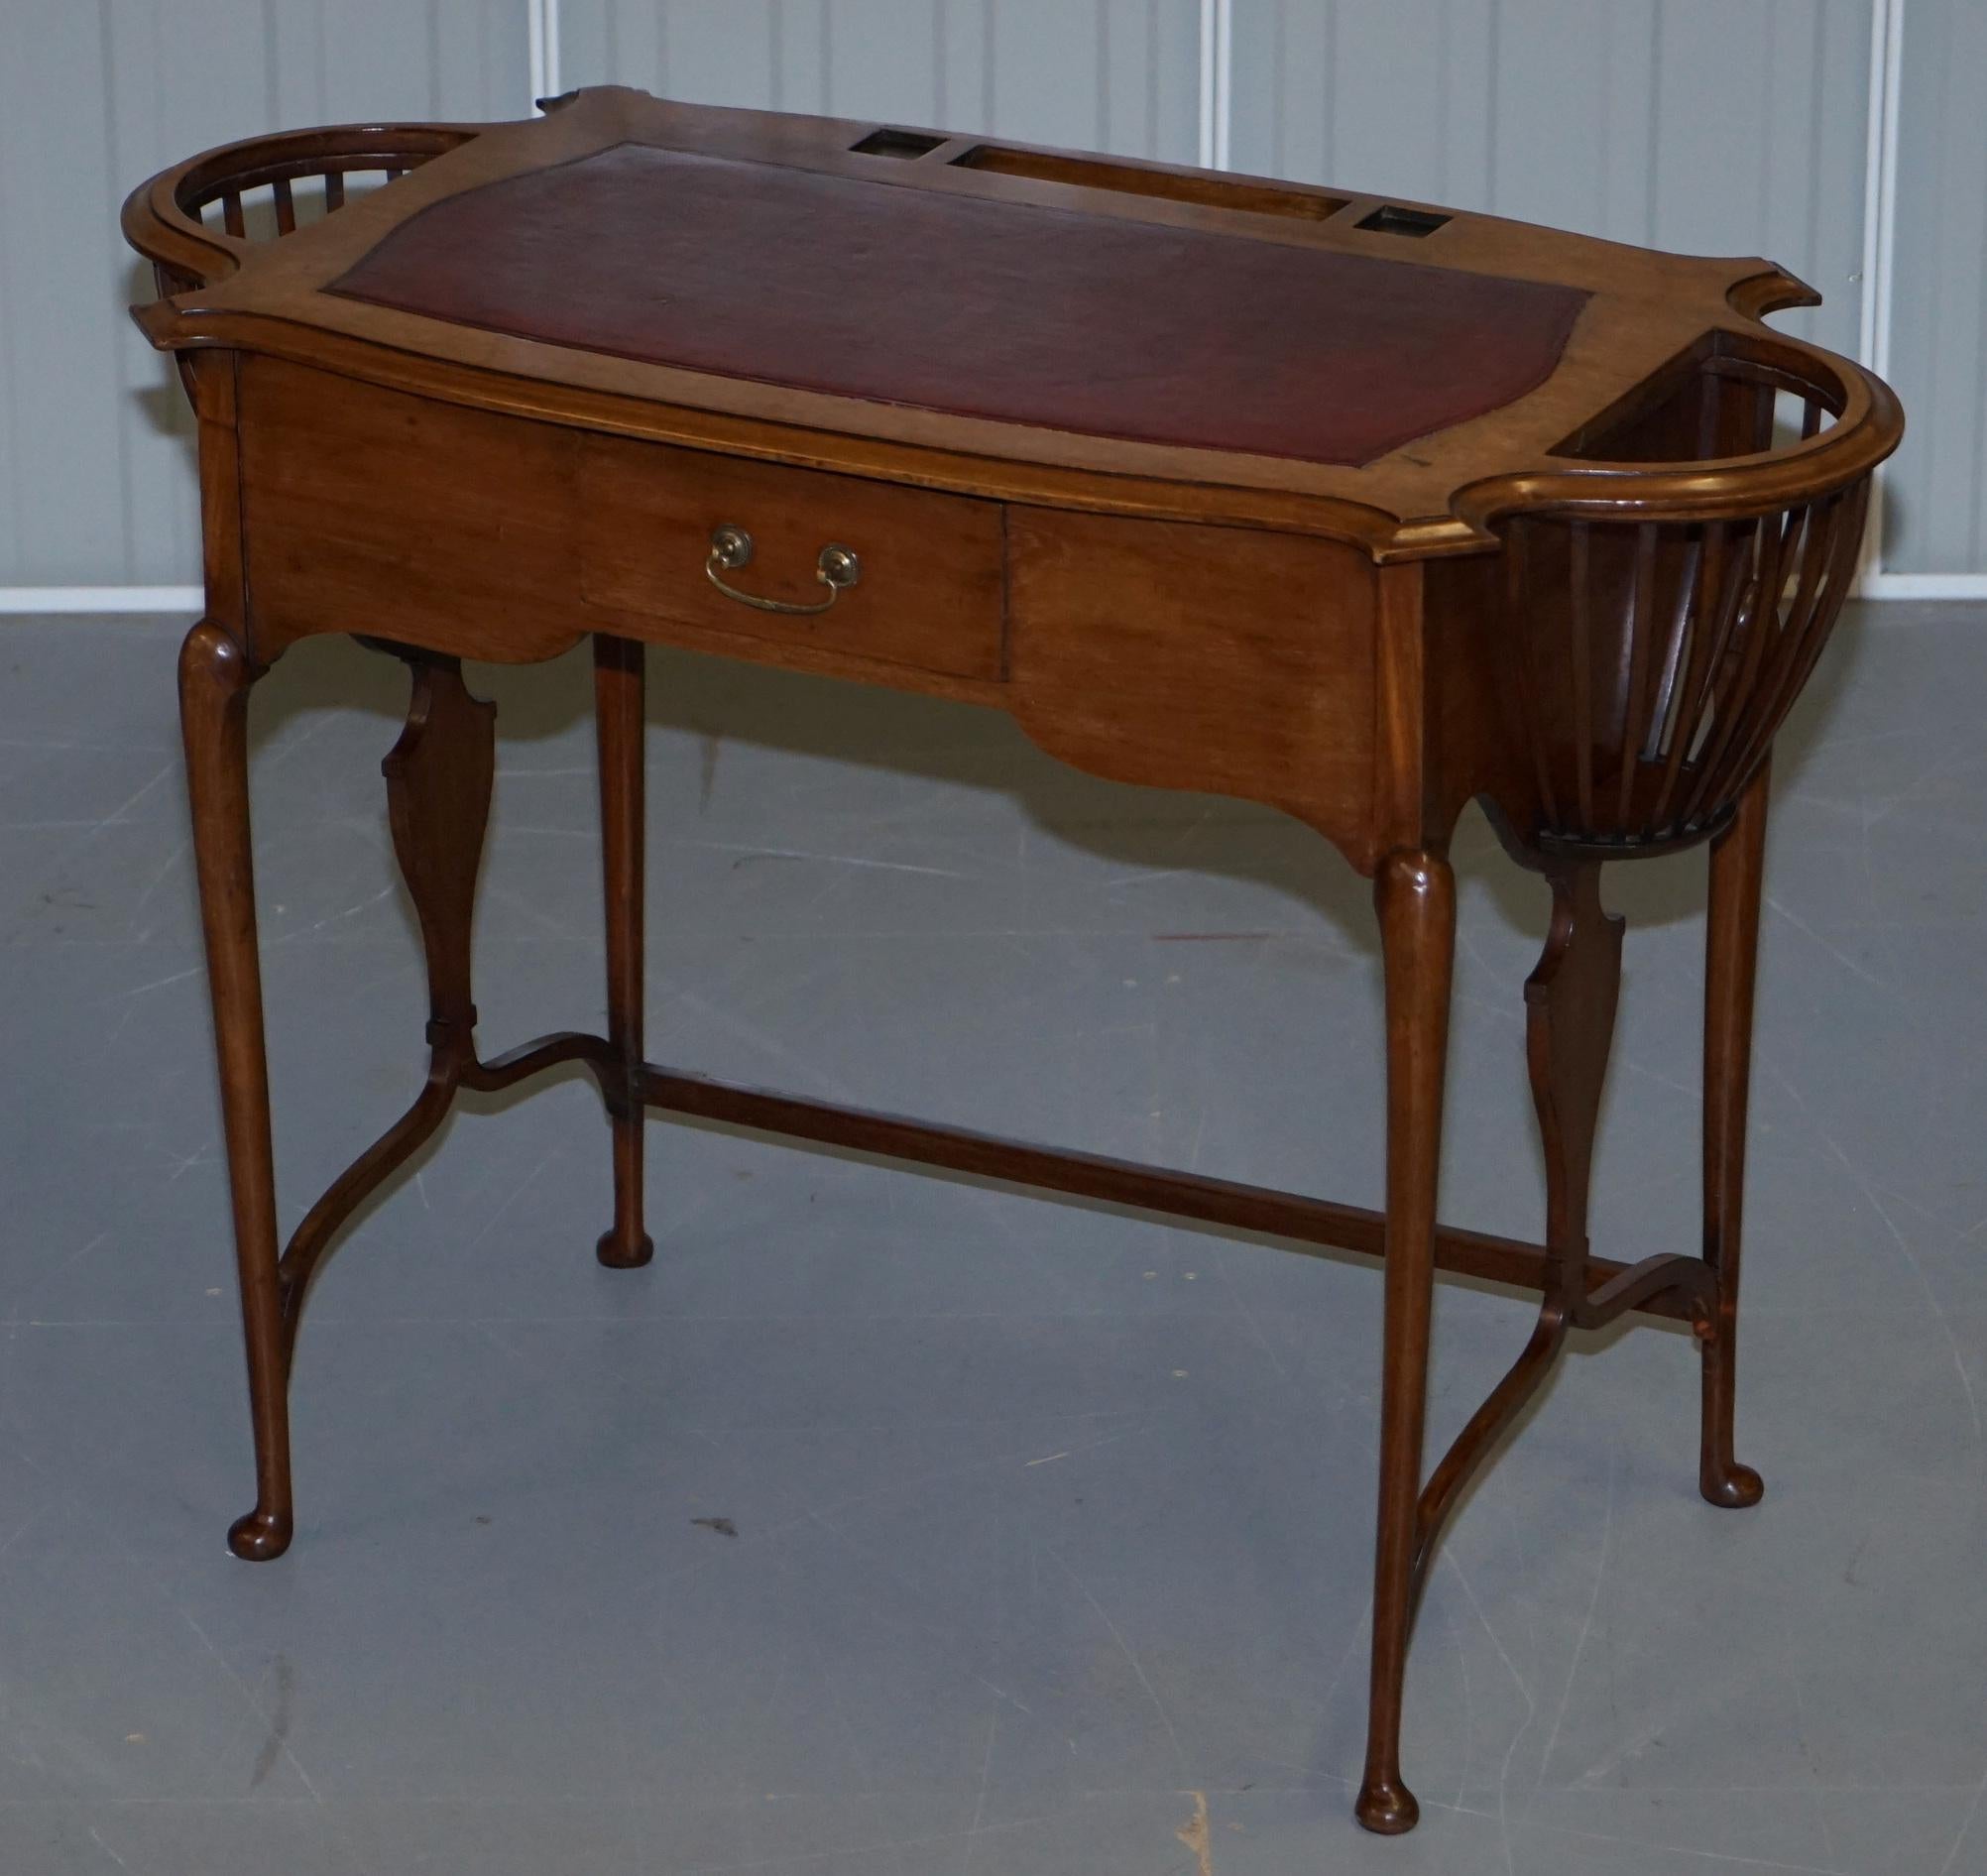 English Rare Victorian circa 1860 Small Mahogany Desk Built in Jardinières for Plants